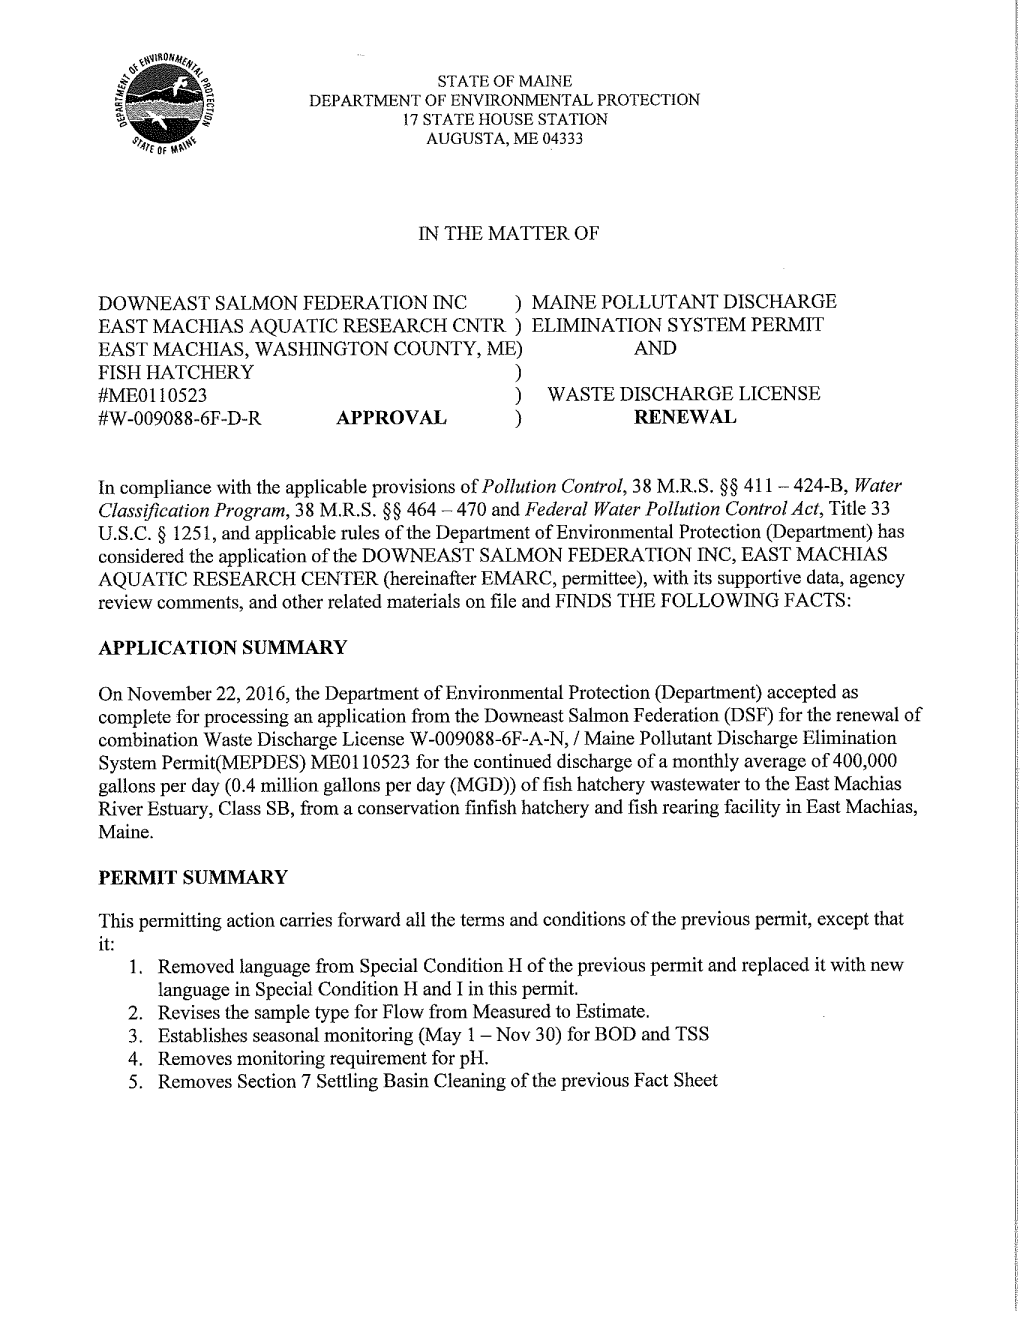 Downeast Salmon Federation Inc., ME0110523, Draft Permit